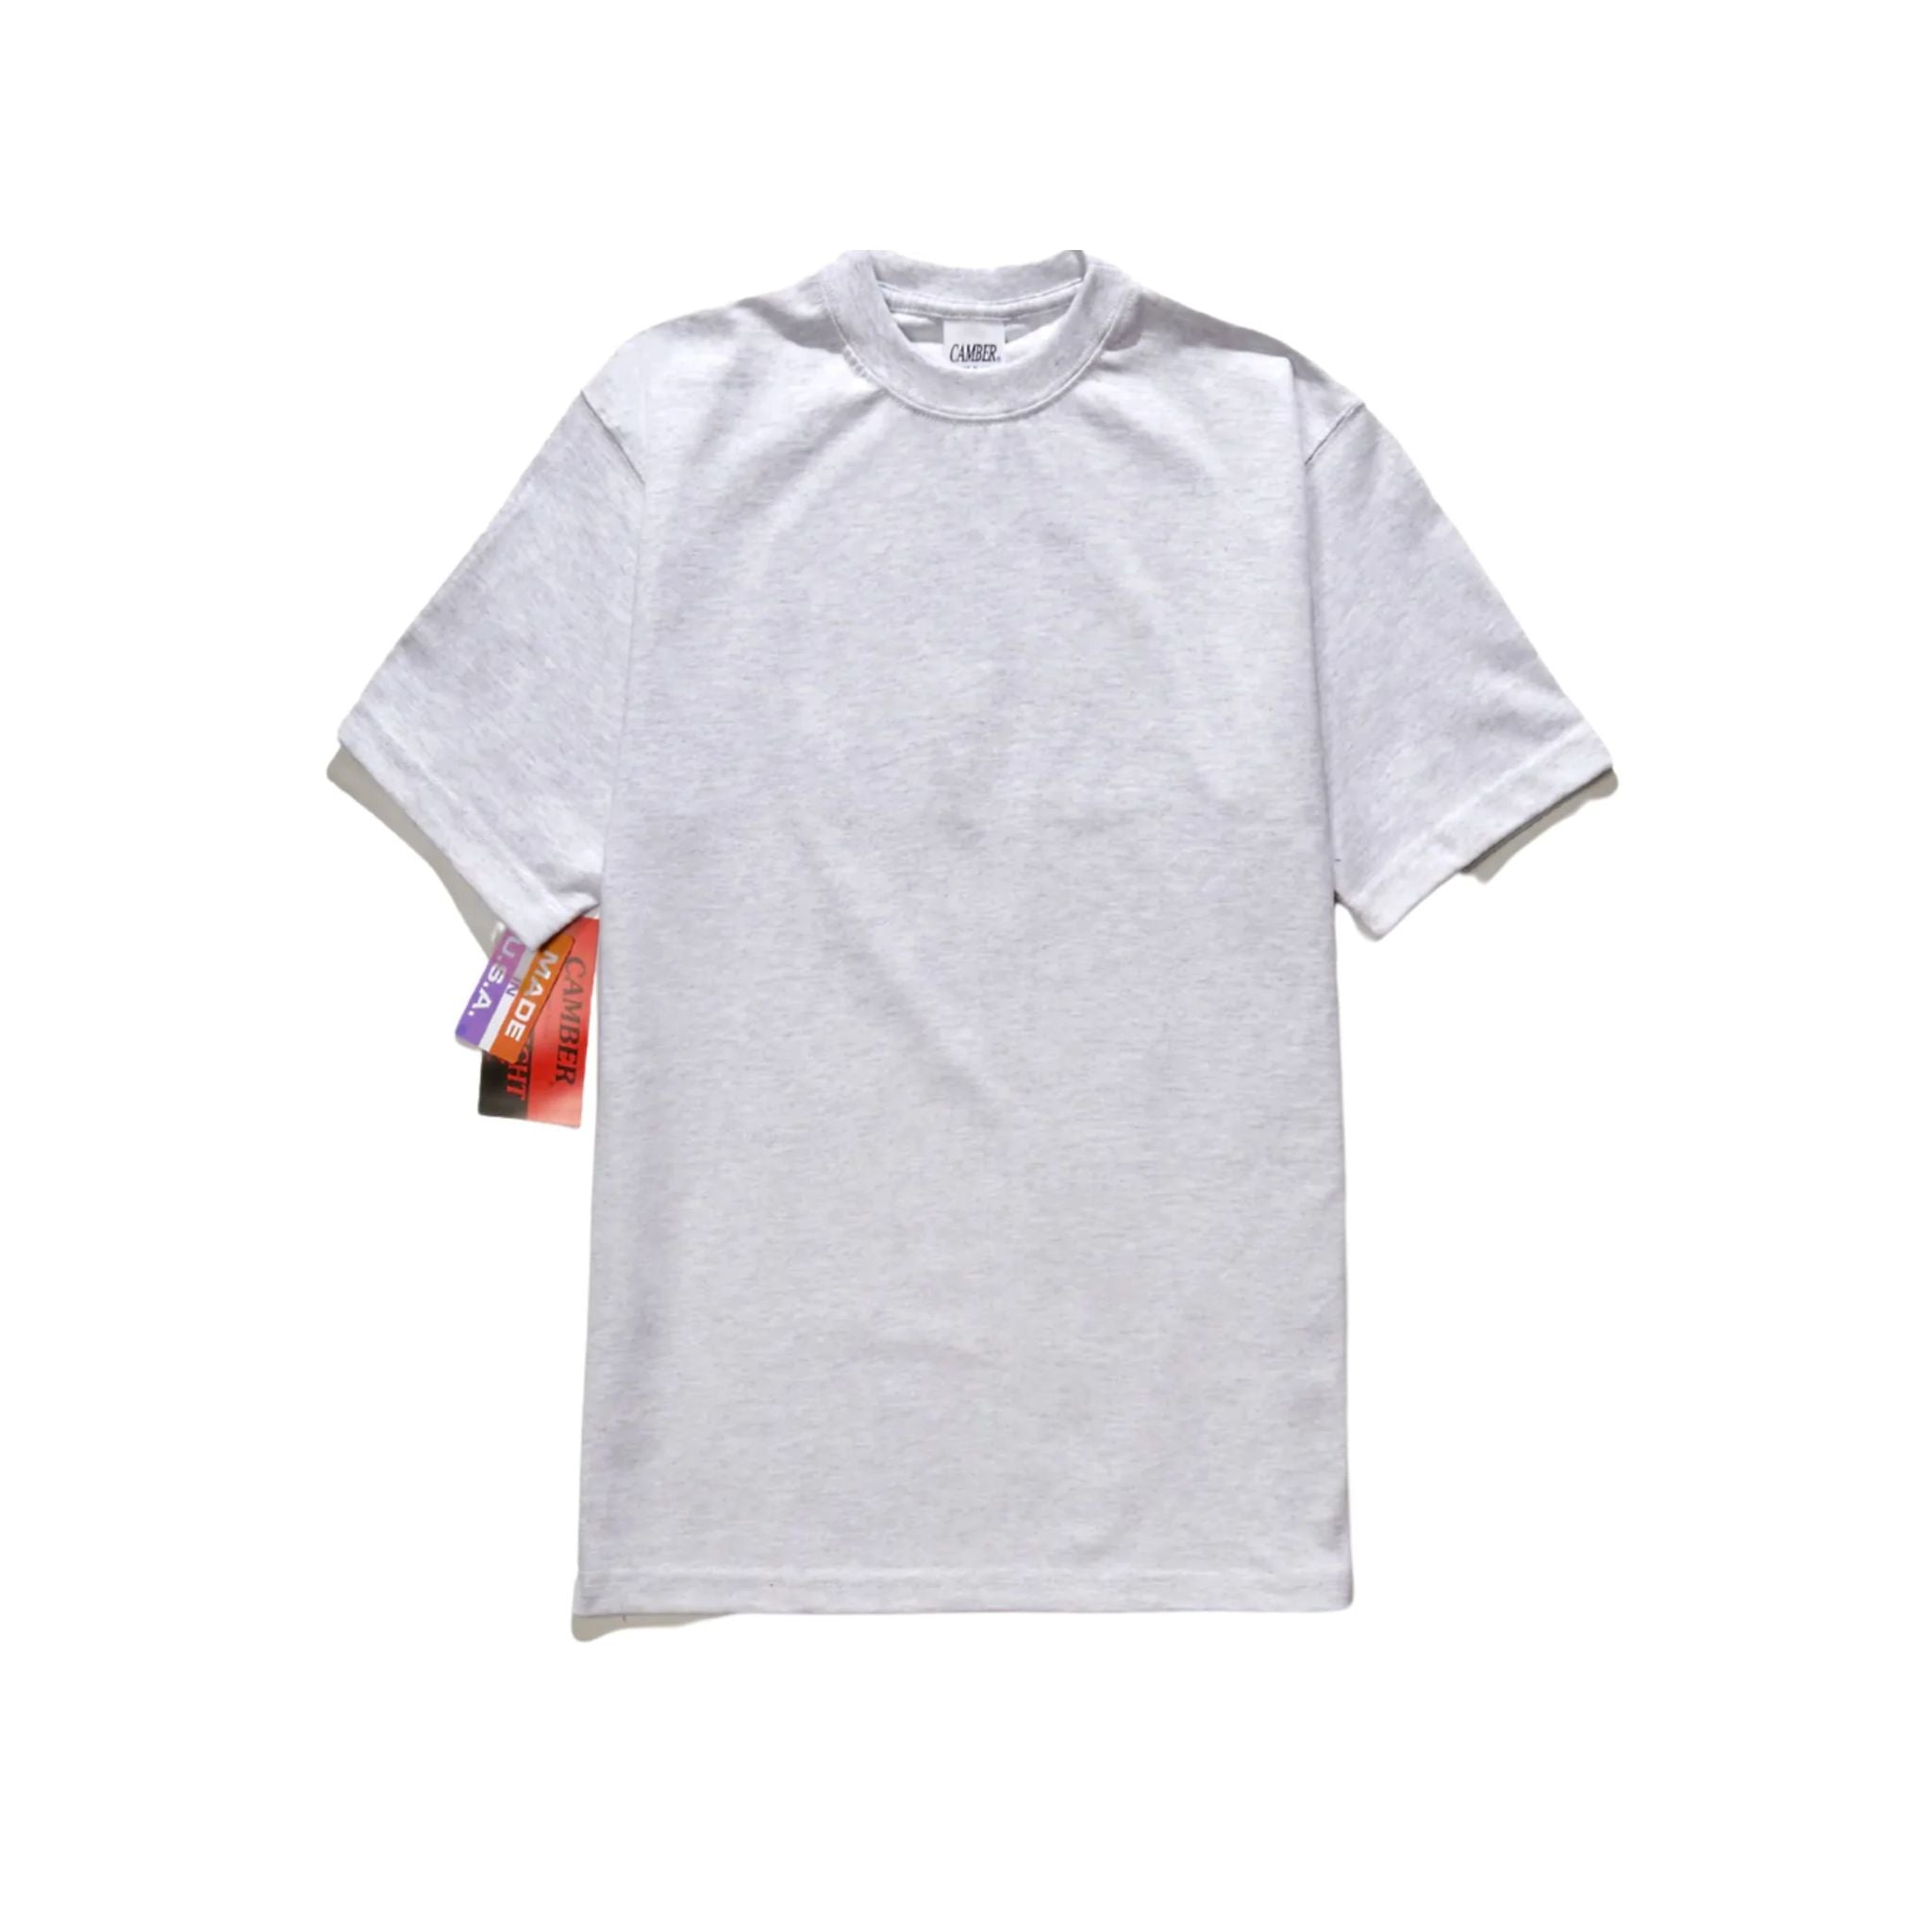 USA – Finest Binario09 - CAMBER Grey T-Shirt 6OZ